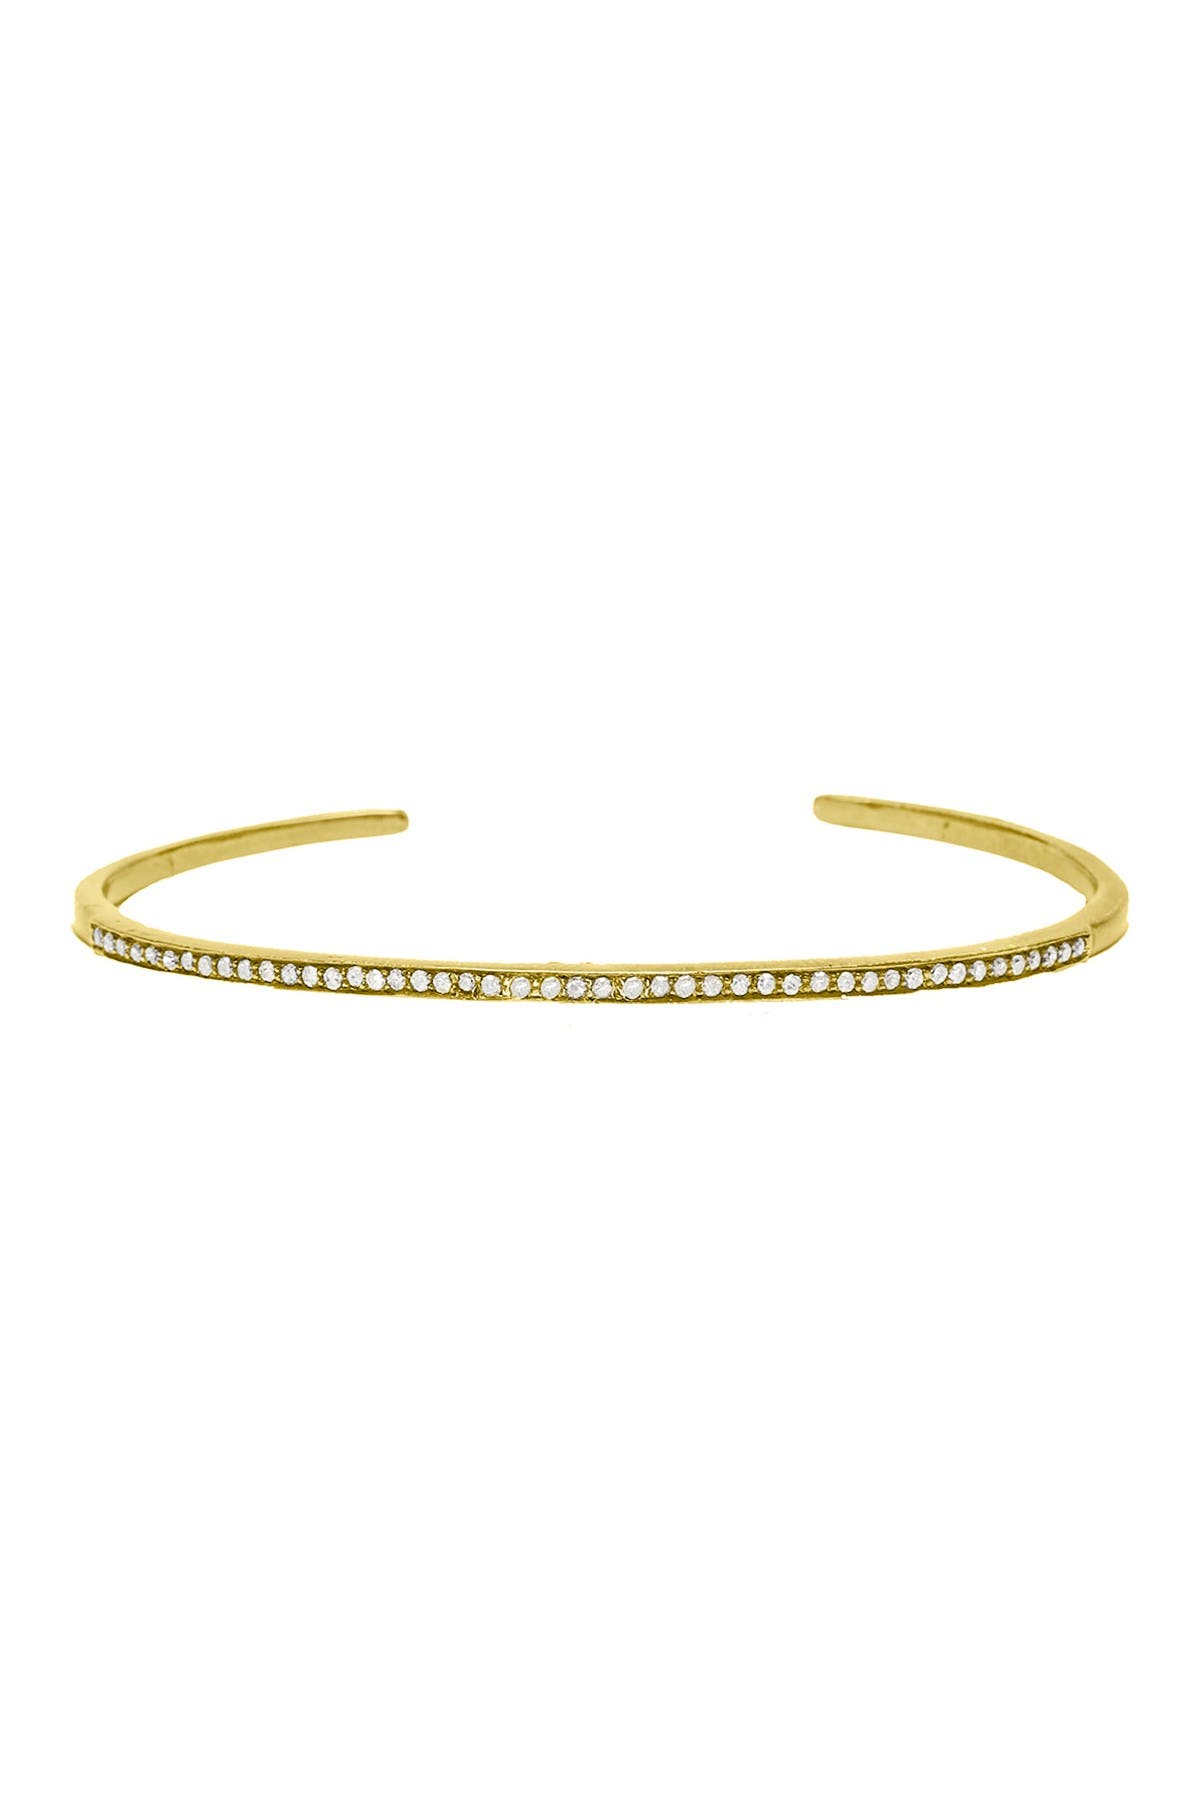 Adornia Fine Mercer 14k Yellow Gold Vermeil Pave Diamond Cuff Bracelet